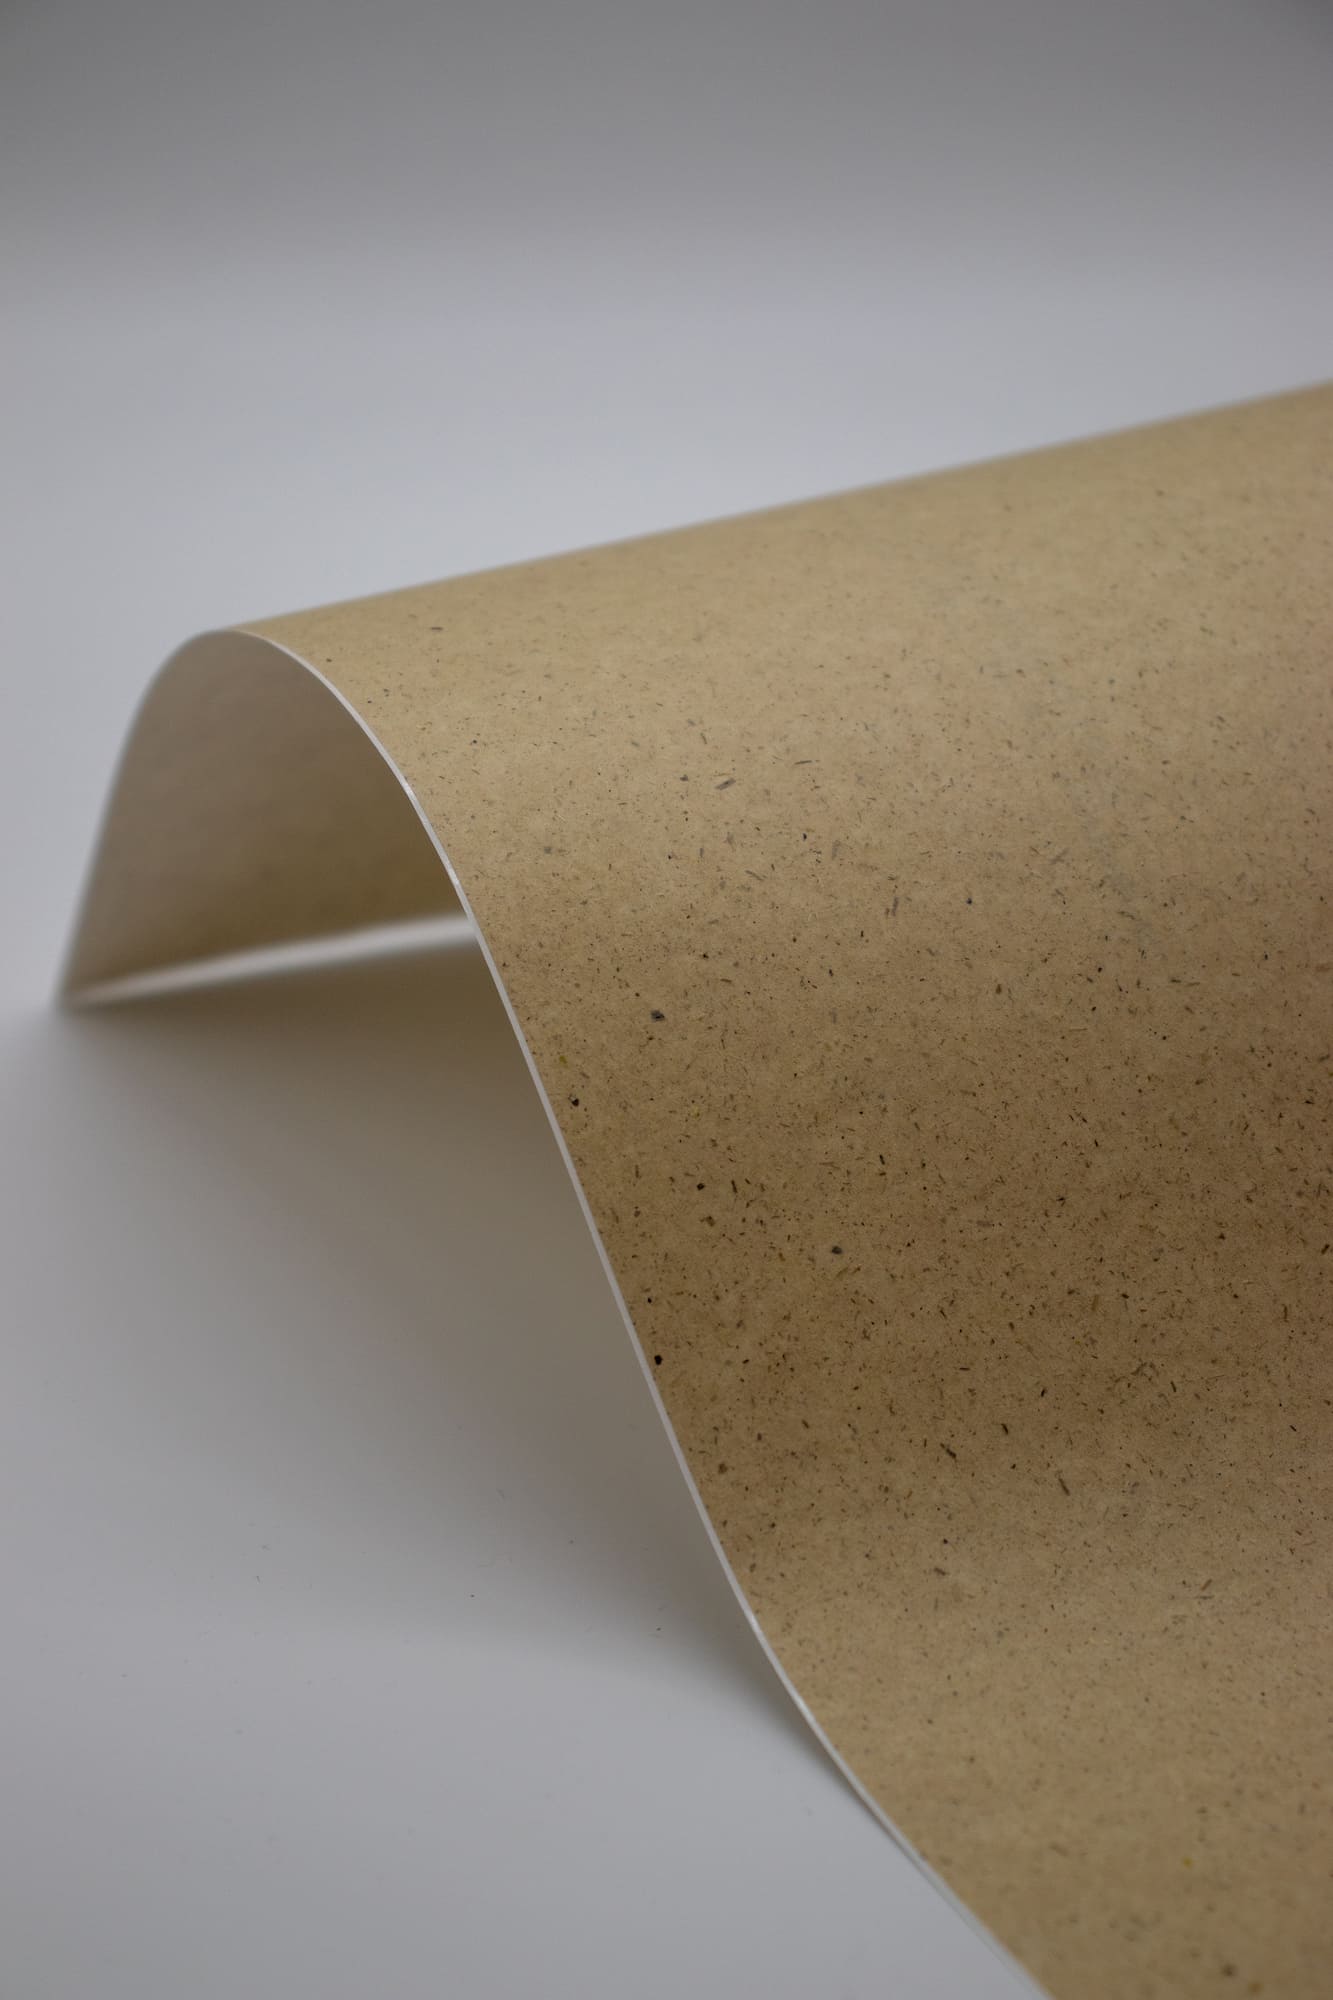 ENDI-HAFT Graspapier Etiketten, 85x55 mm auf DIN A4 Bögen